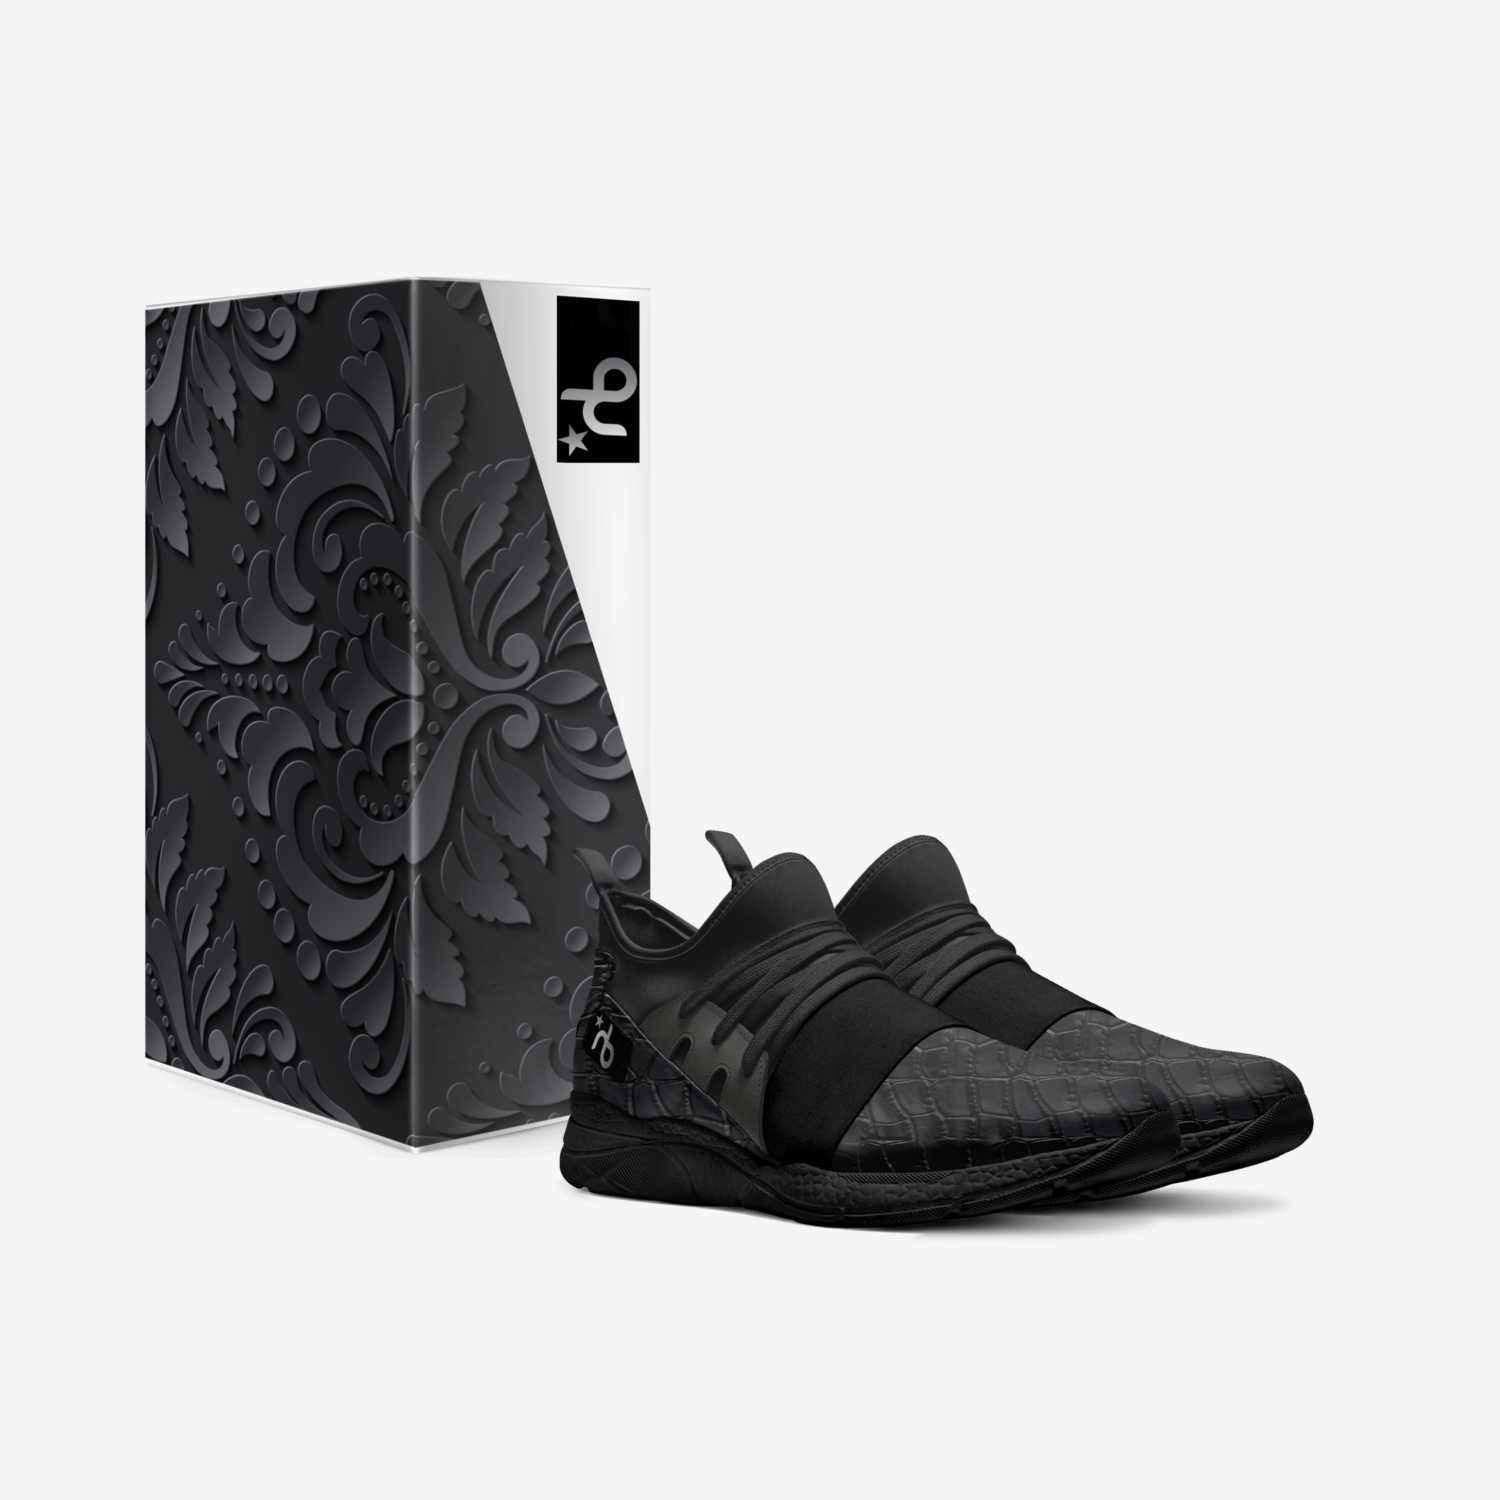 NEVER BROKE POCA custom made in Italy shoes by Johannes Meran | Box view